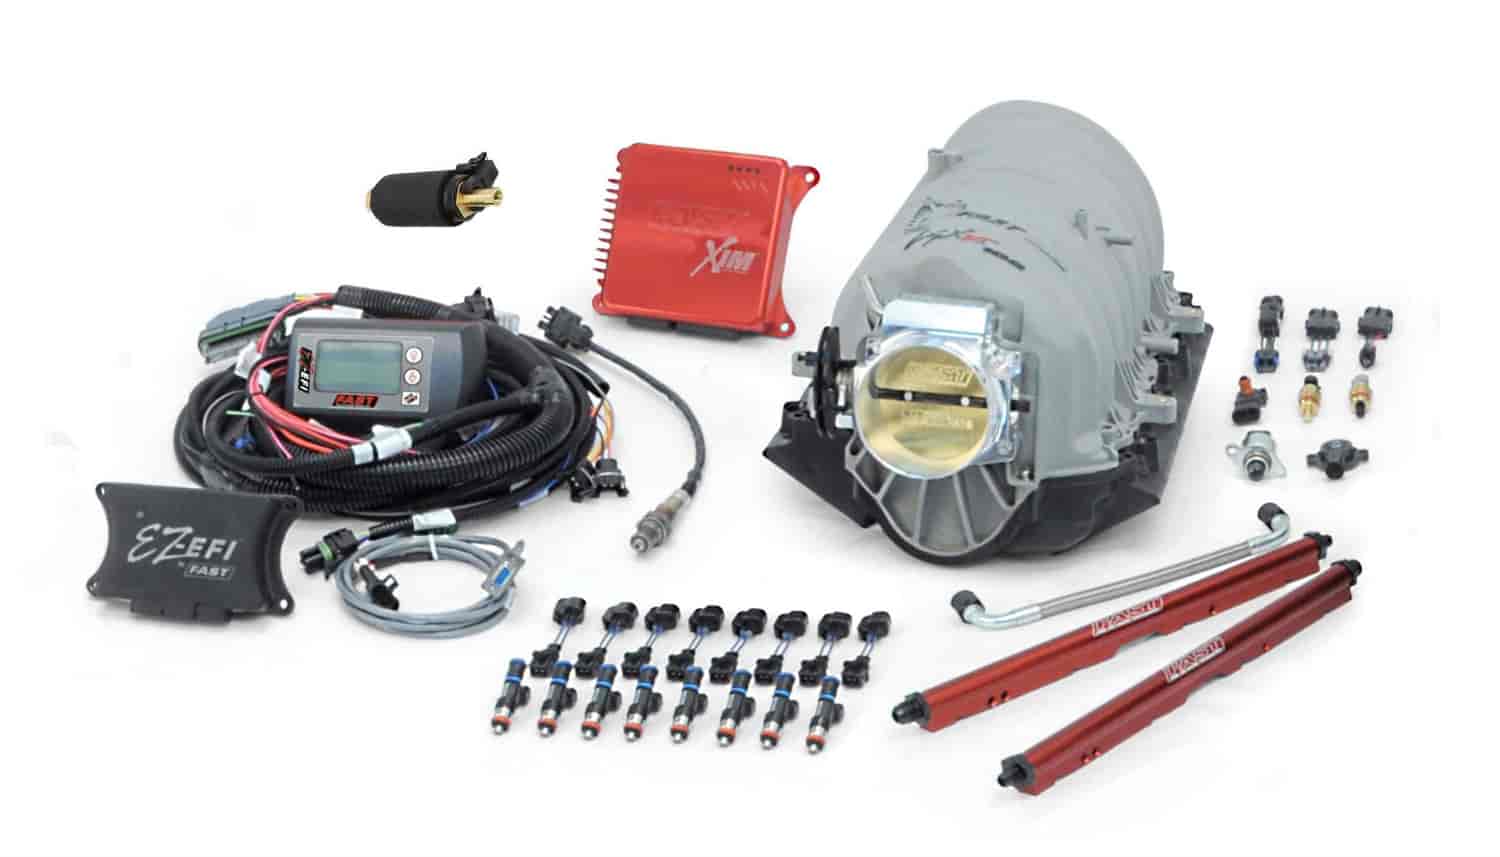 EZ-EFI Engine Kit with LSXRT Intake Manifold Includes Inline Fuel Pump